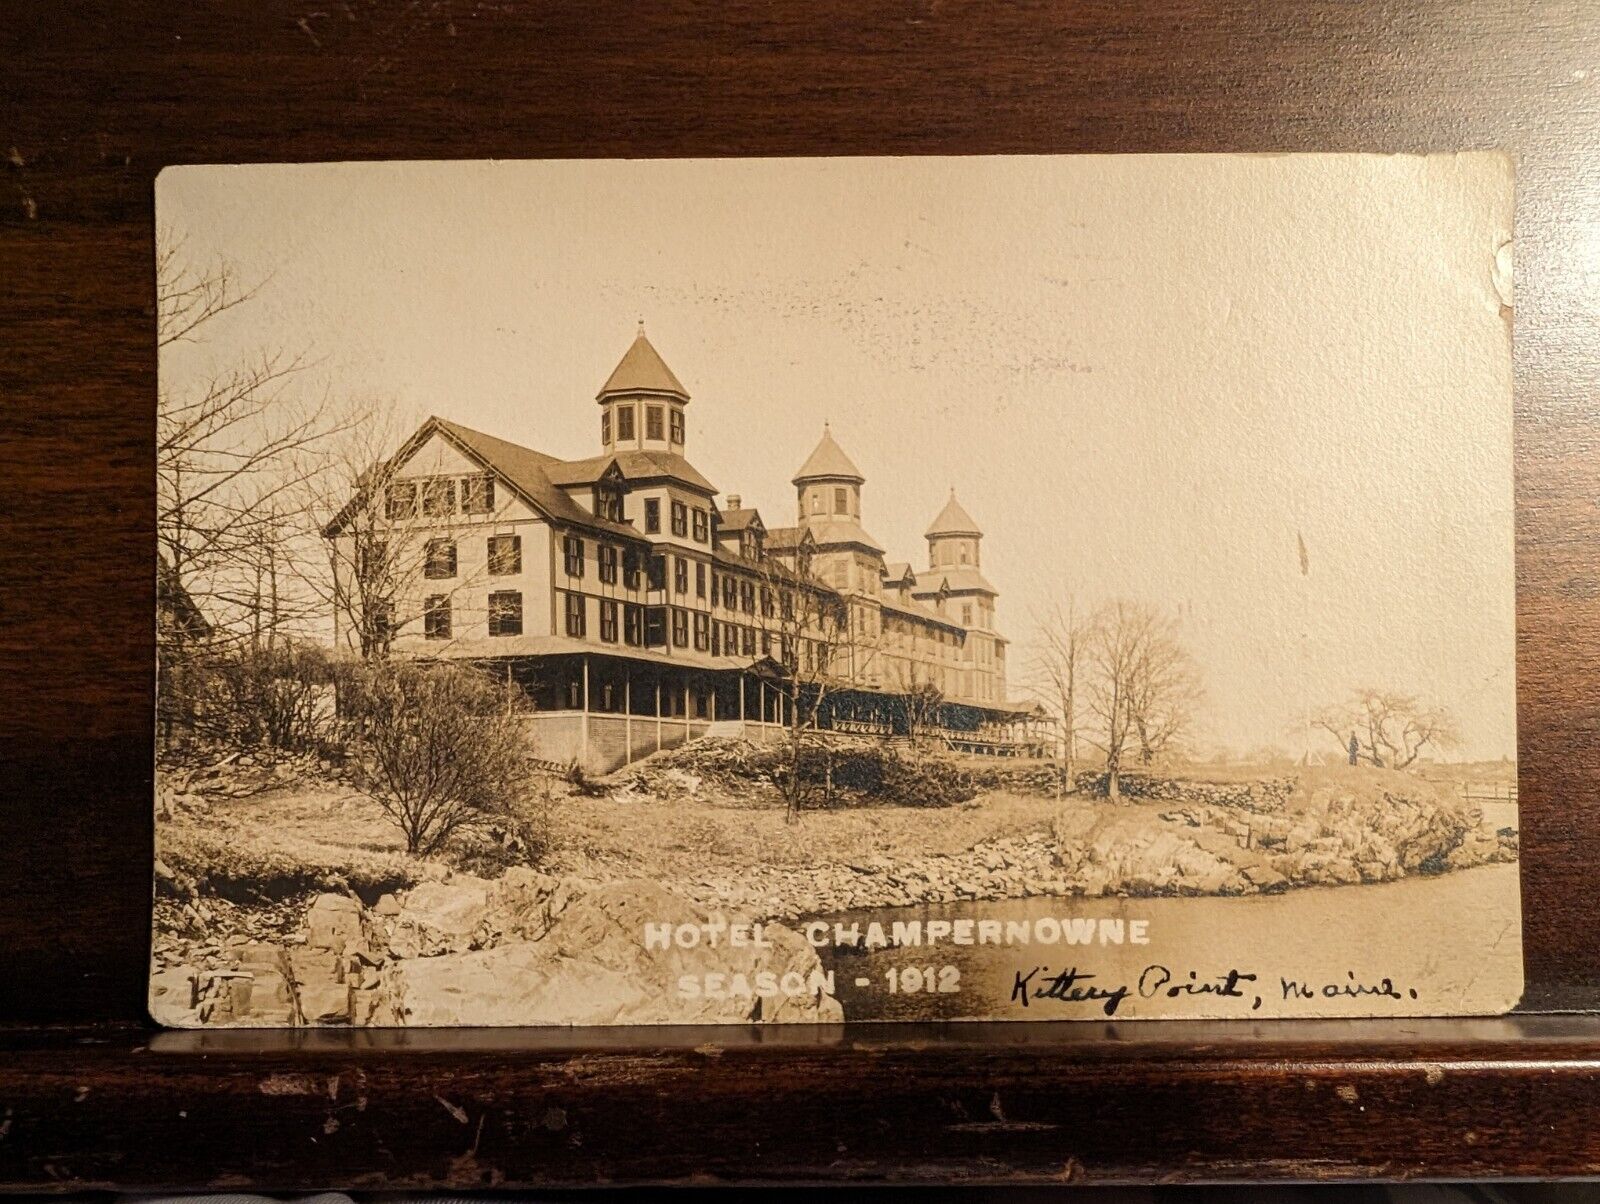 BA1 132. RPPC, 1912 Season, Hotel Champernowne, Kittery, Maine